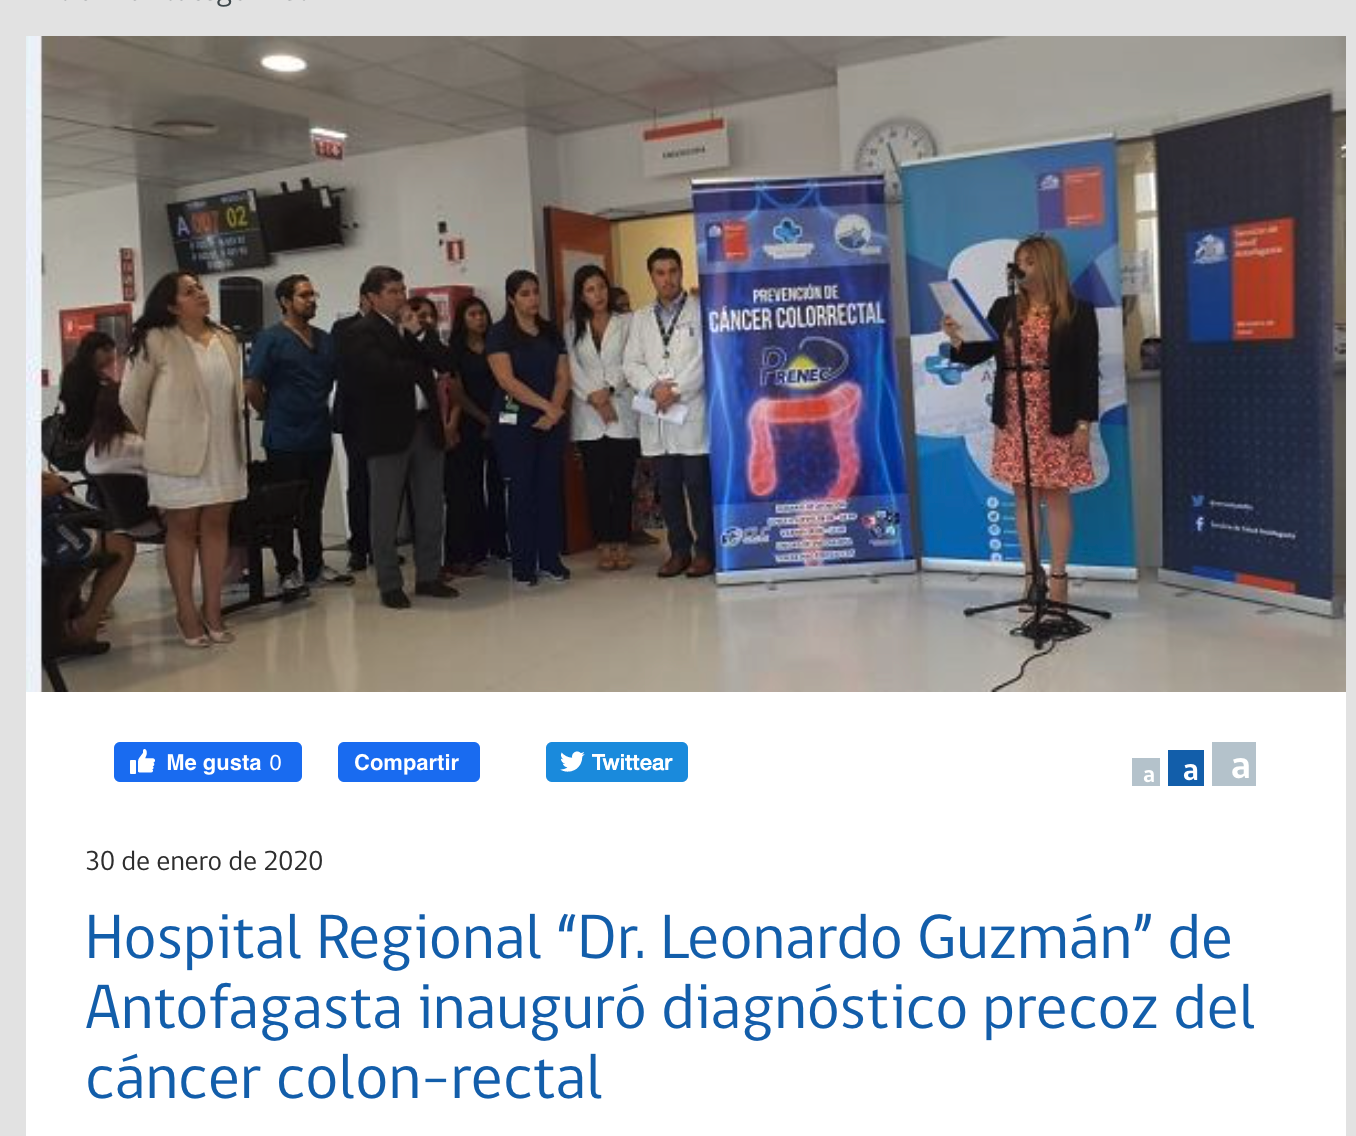 Hospital Regional “Dr. Leonardo Guzmán” de Antofagasta inauguró diagnóstico precoz del cáncer colon-rectal